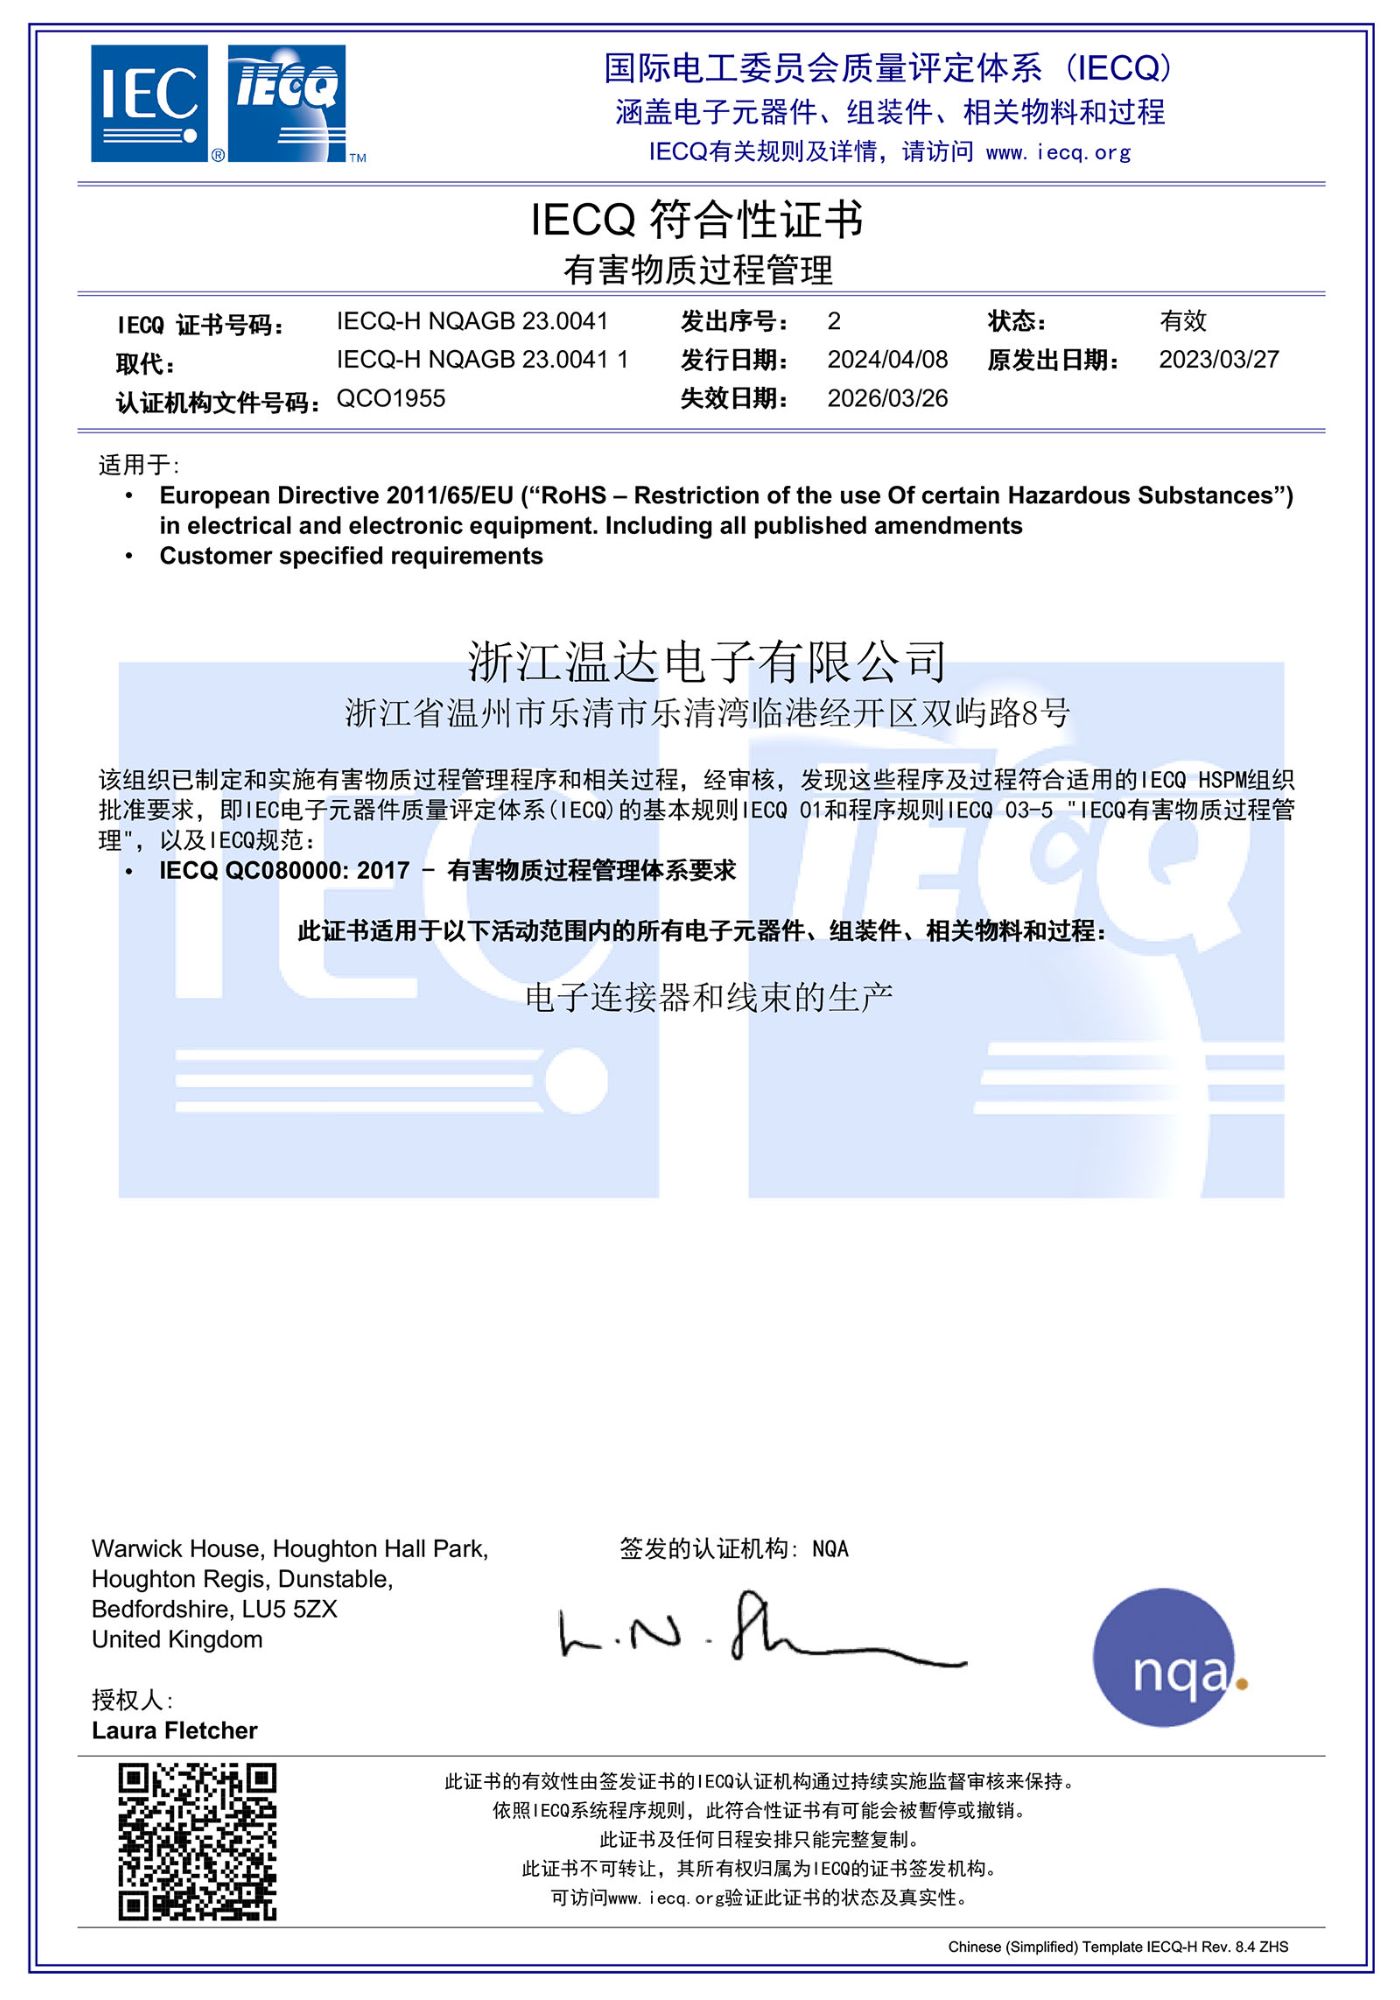 IECQ Compliance Certificate